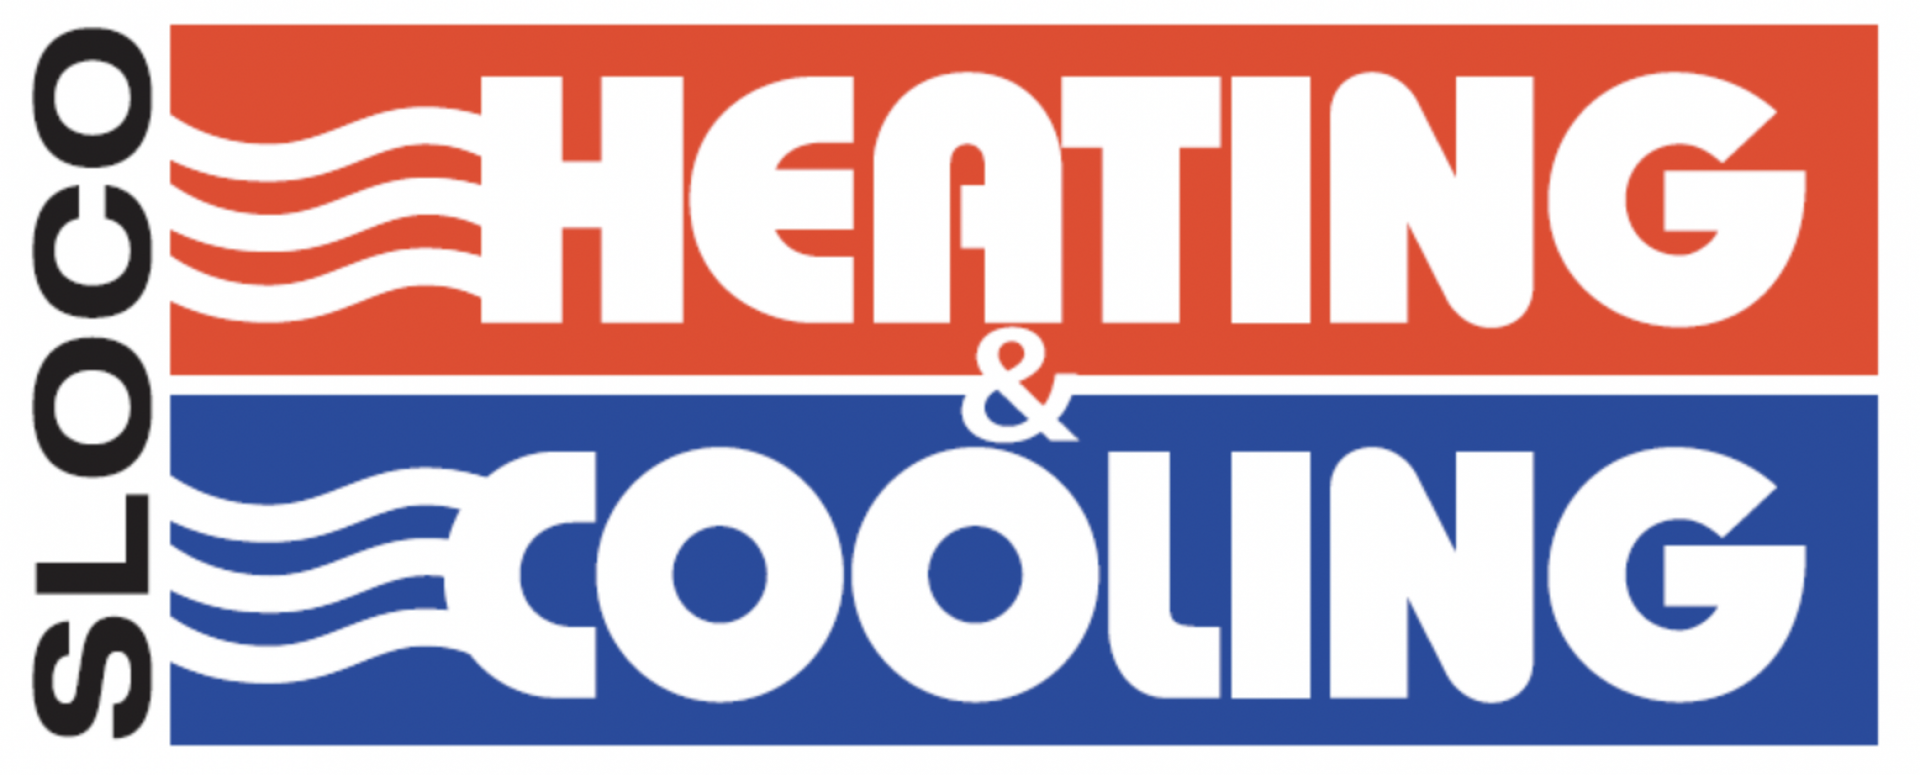 SLOCO Heating & Cooling Inc. company logo